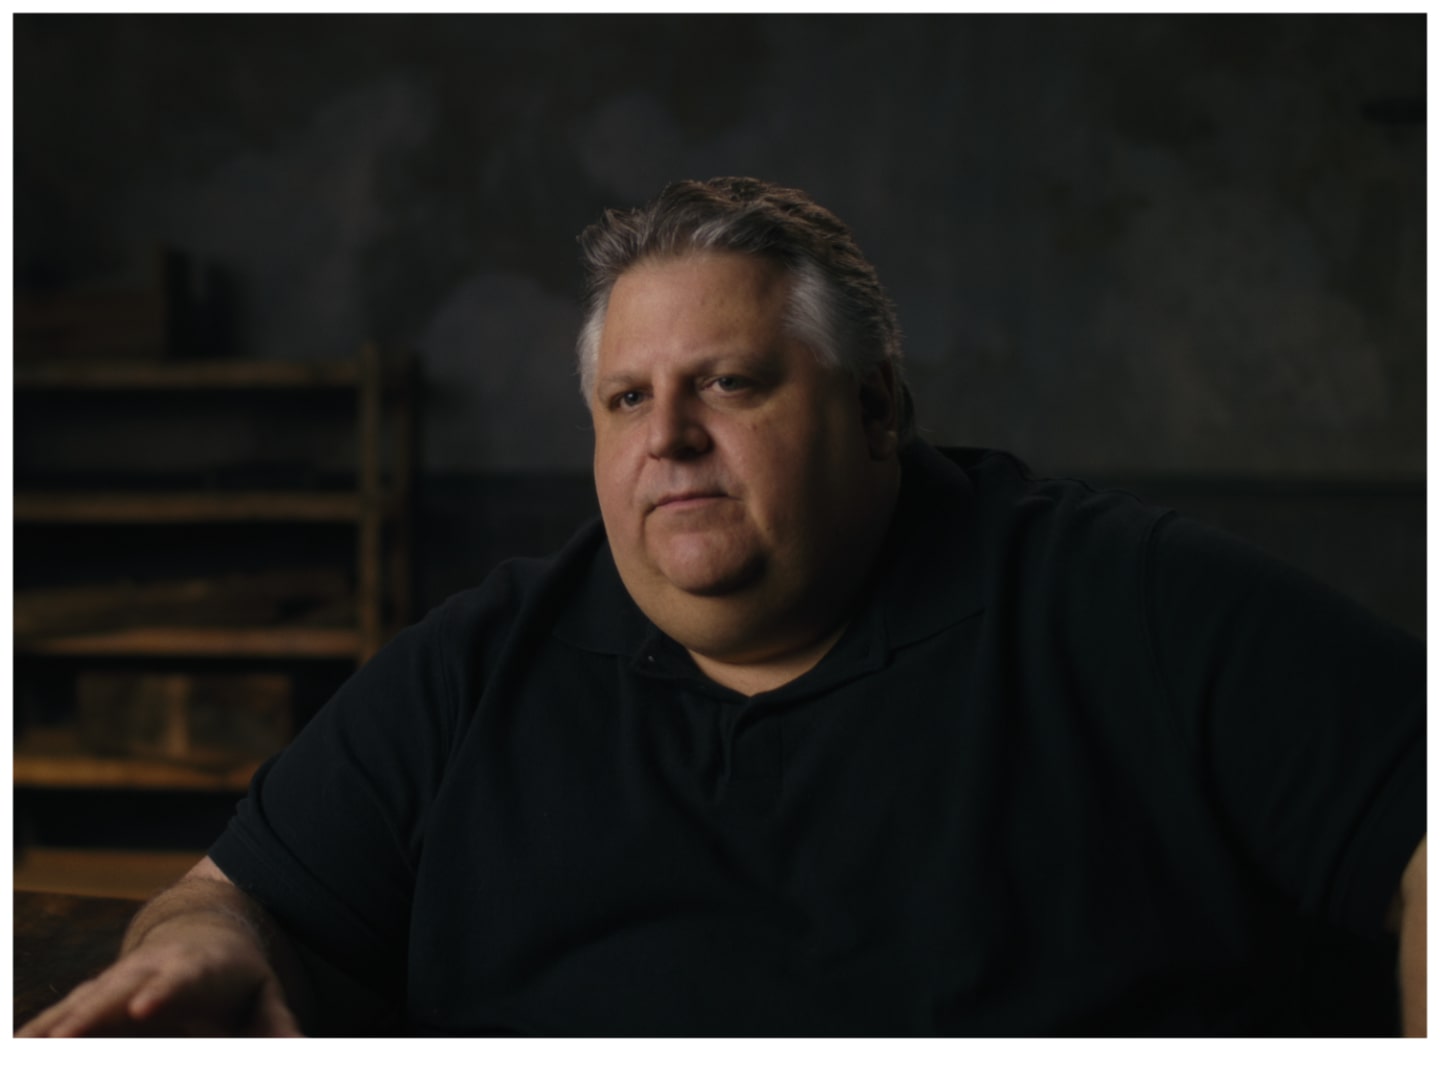 David Thibodeau, one of David Koresh's followers as seen in 'Waco: American Apocalypse'